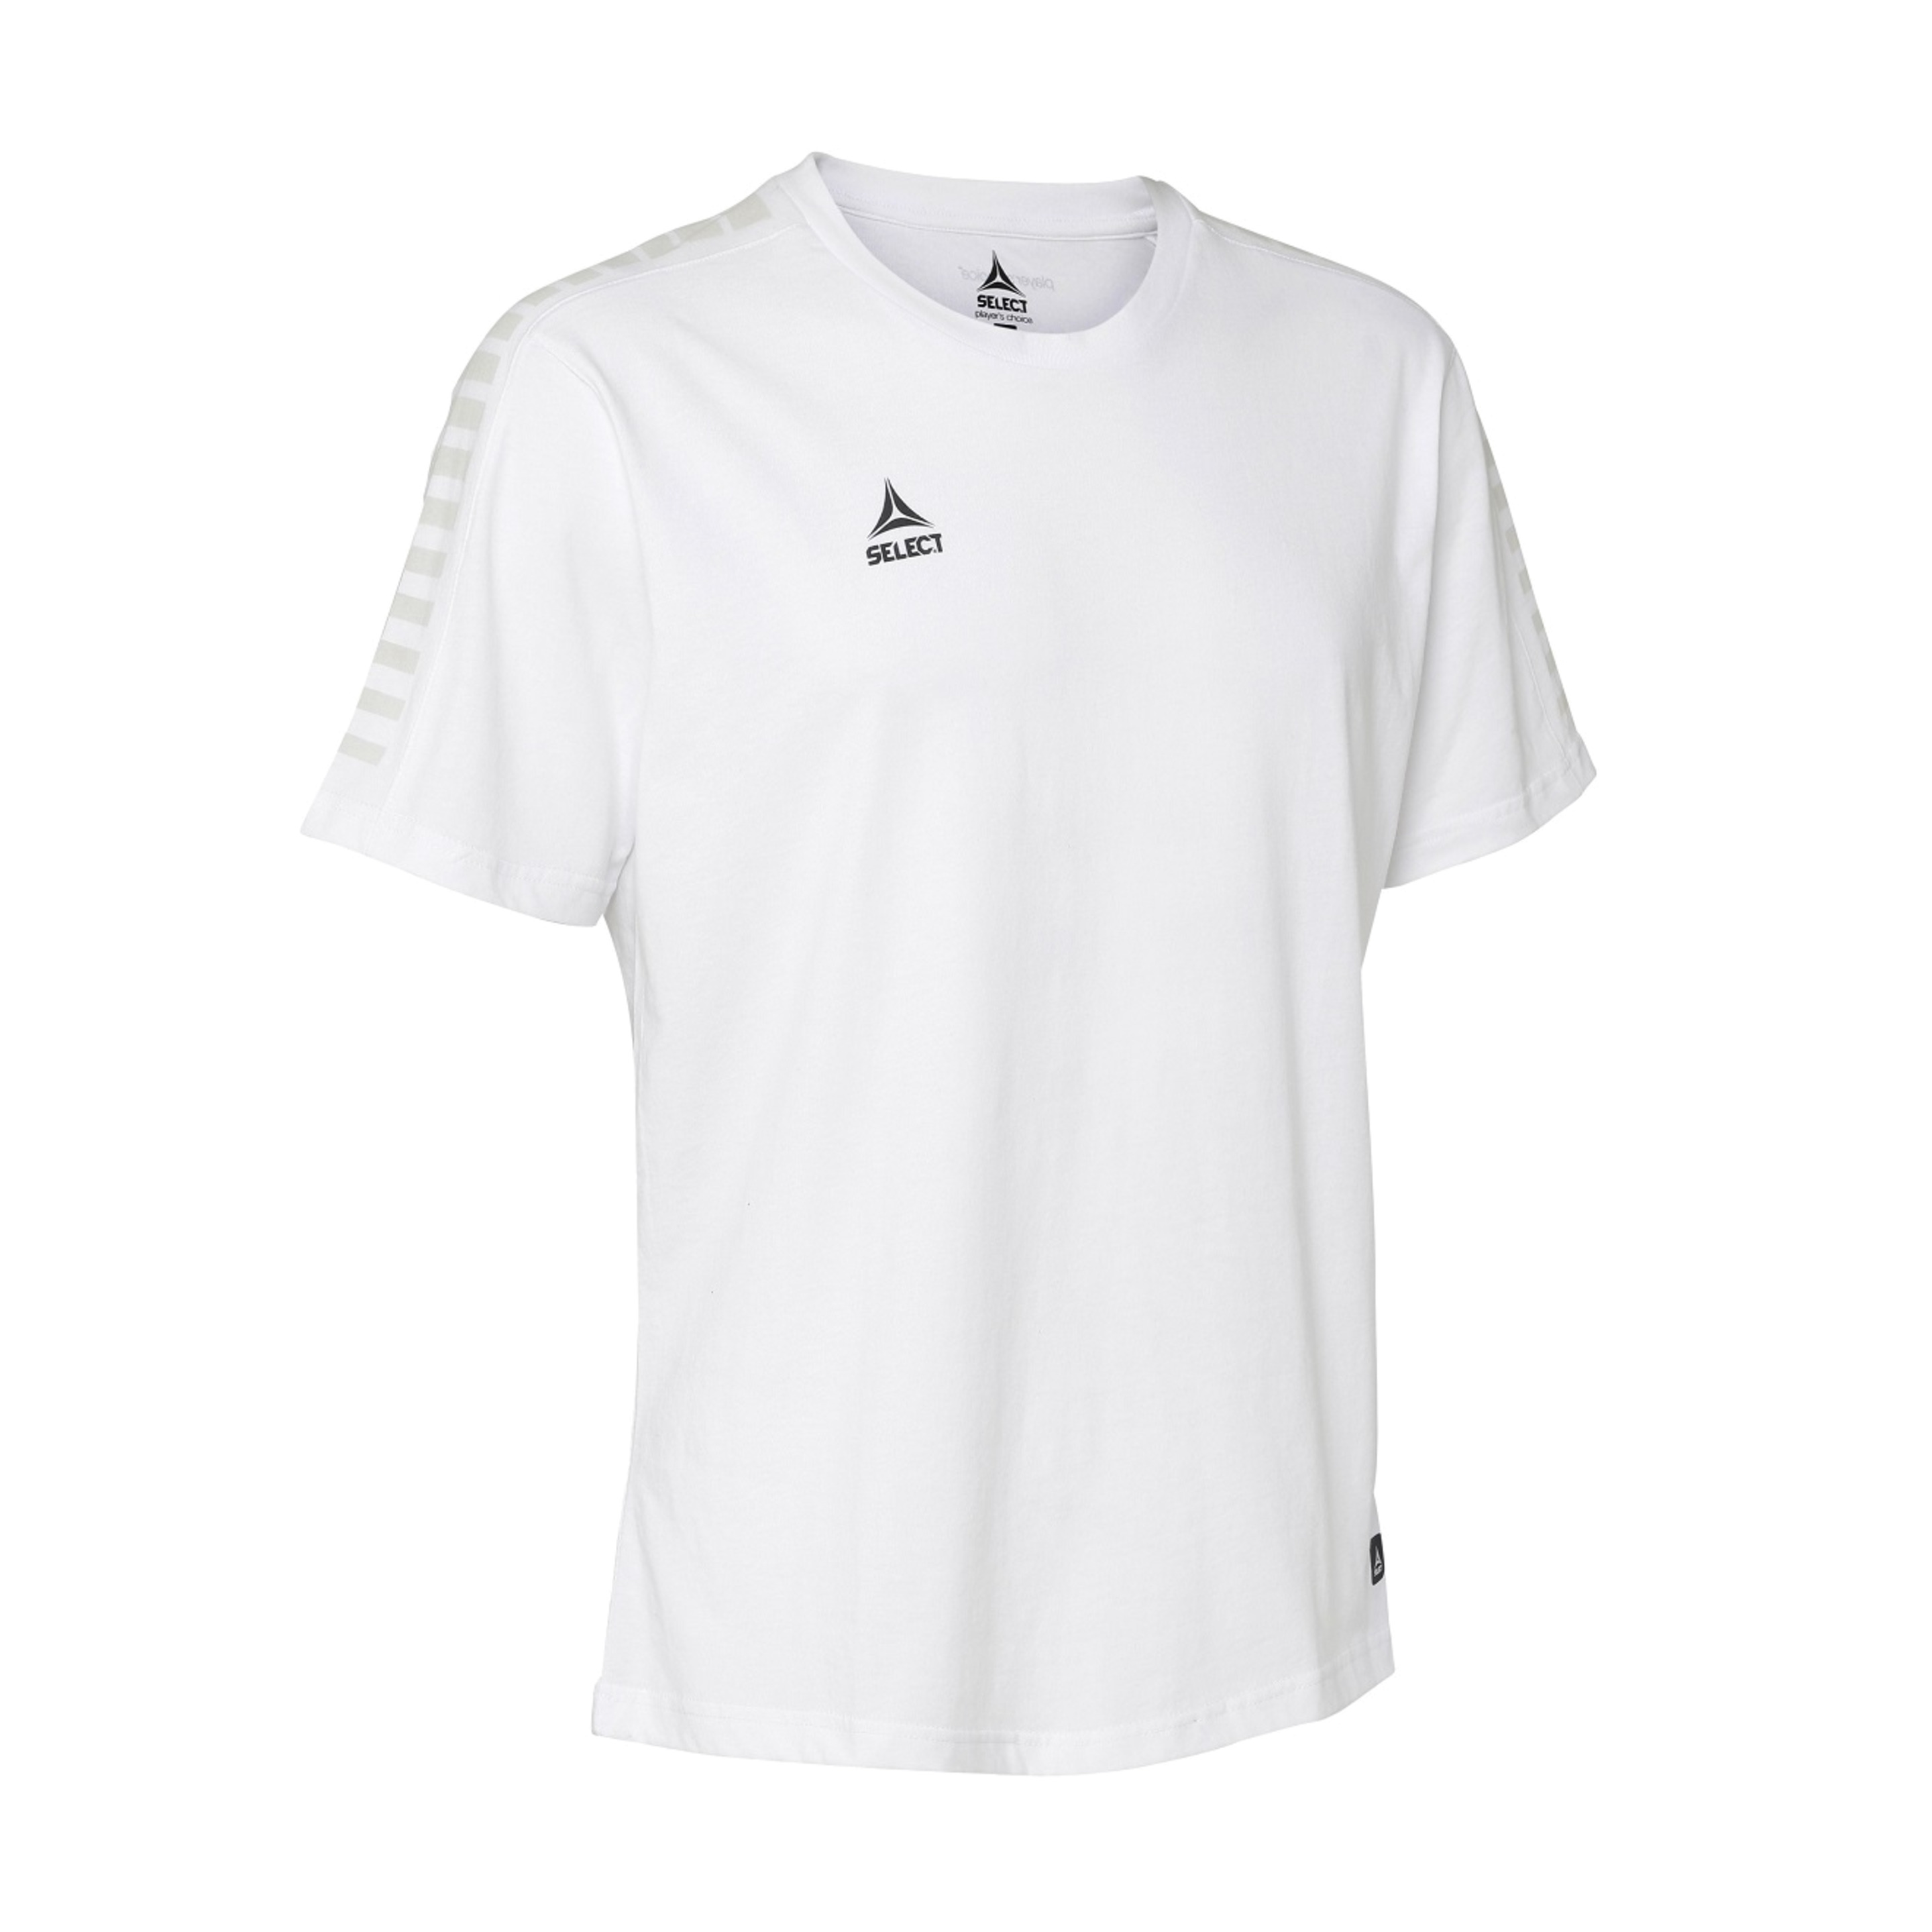 Camiseta Select Torino - blanco - 